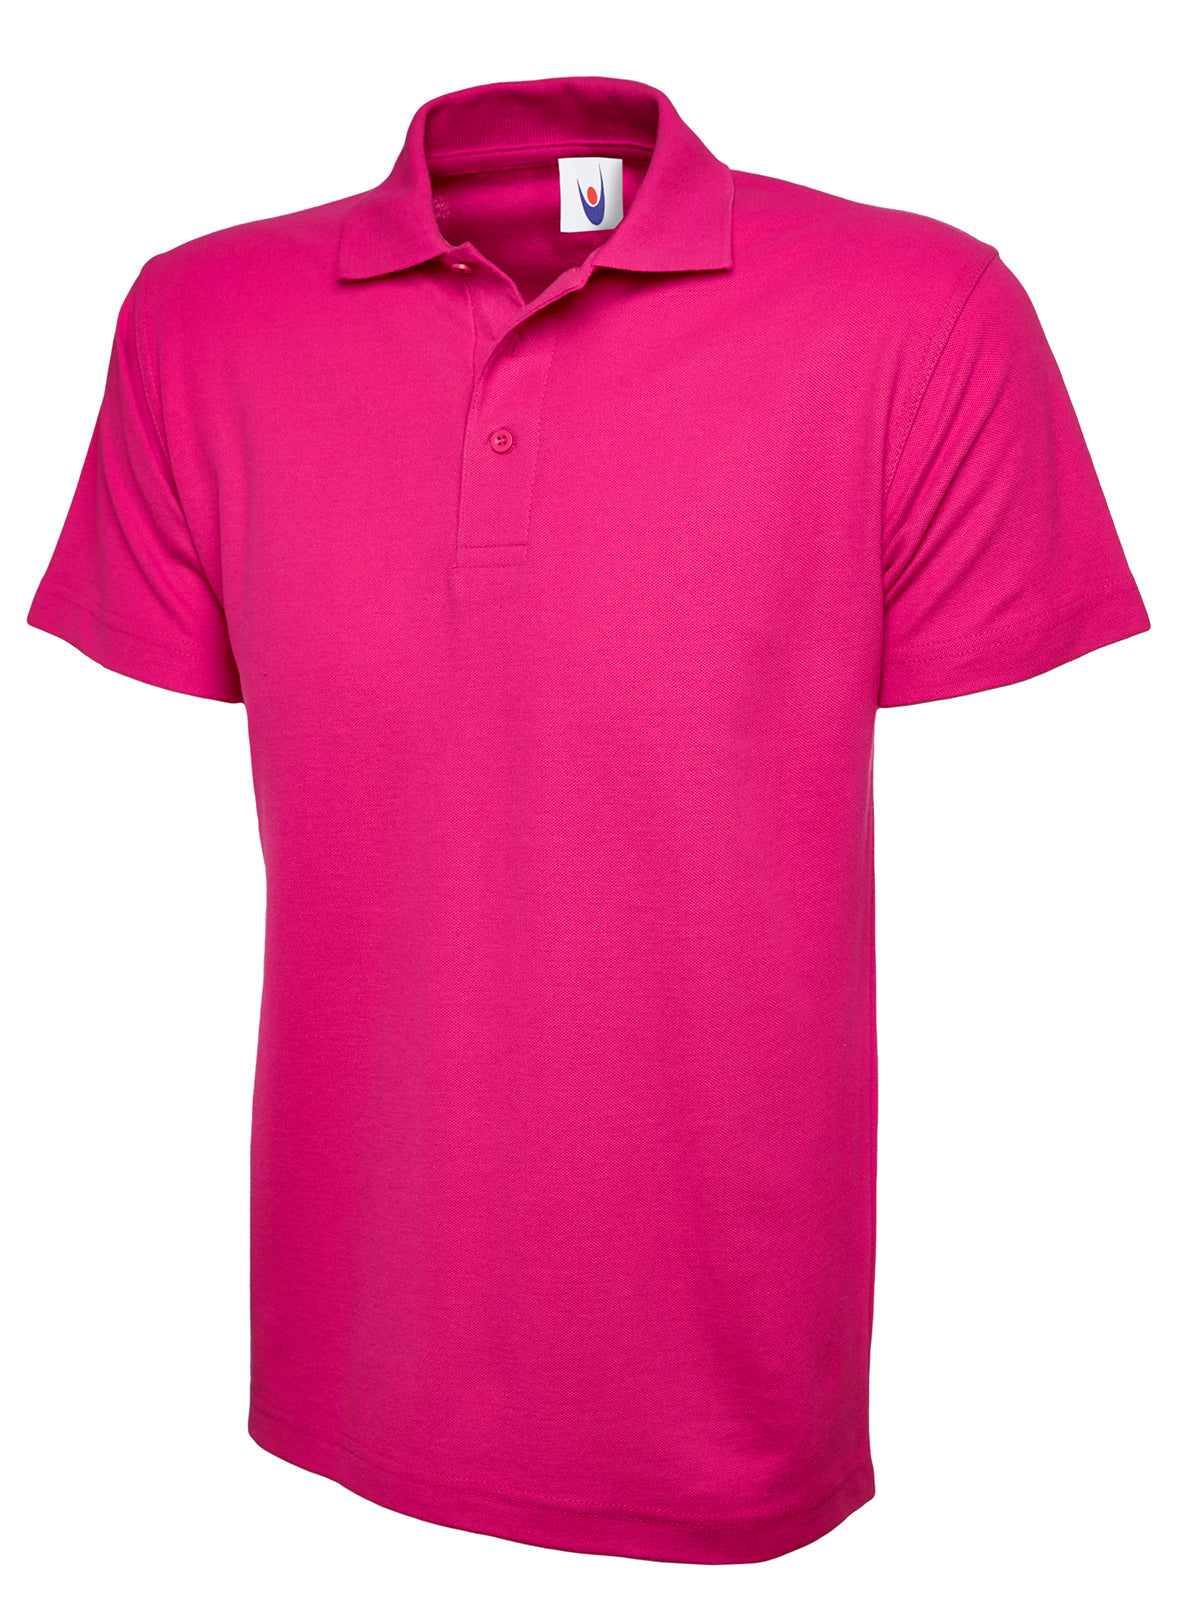 Uneek Classic Unisex Work Polo Shirt UC101 - Hot Pink